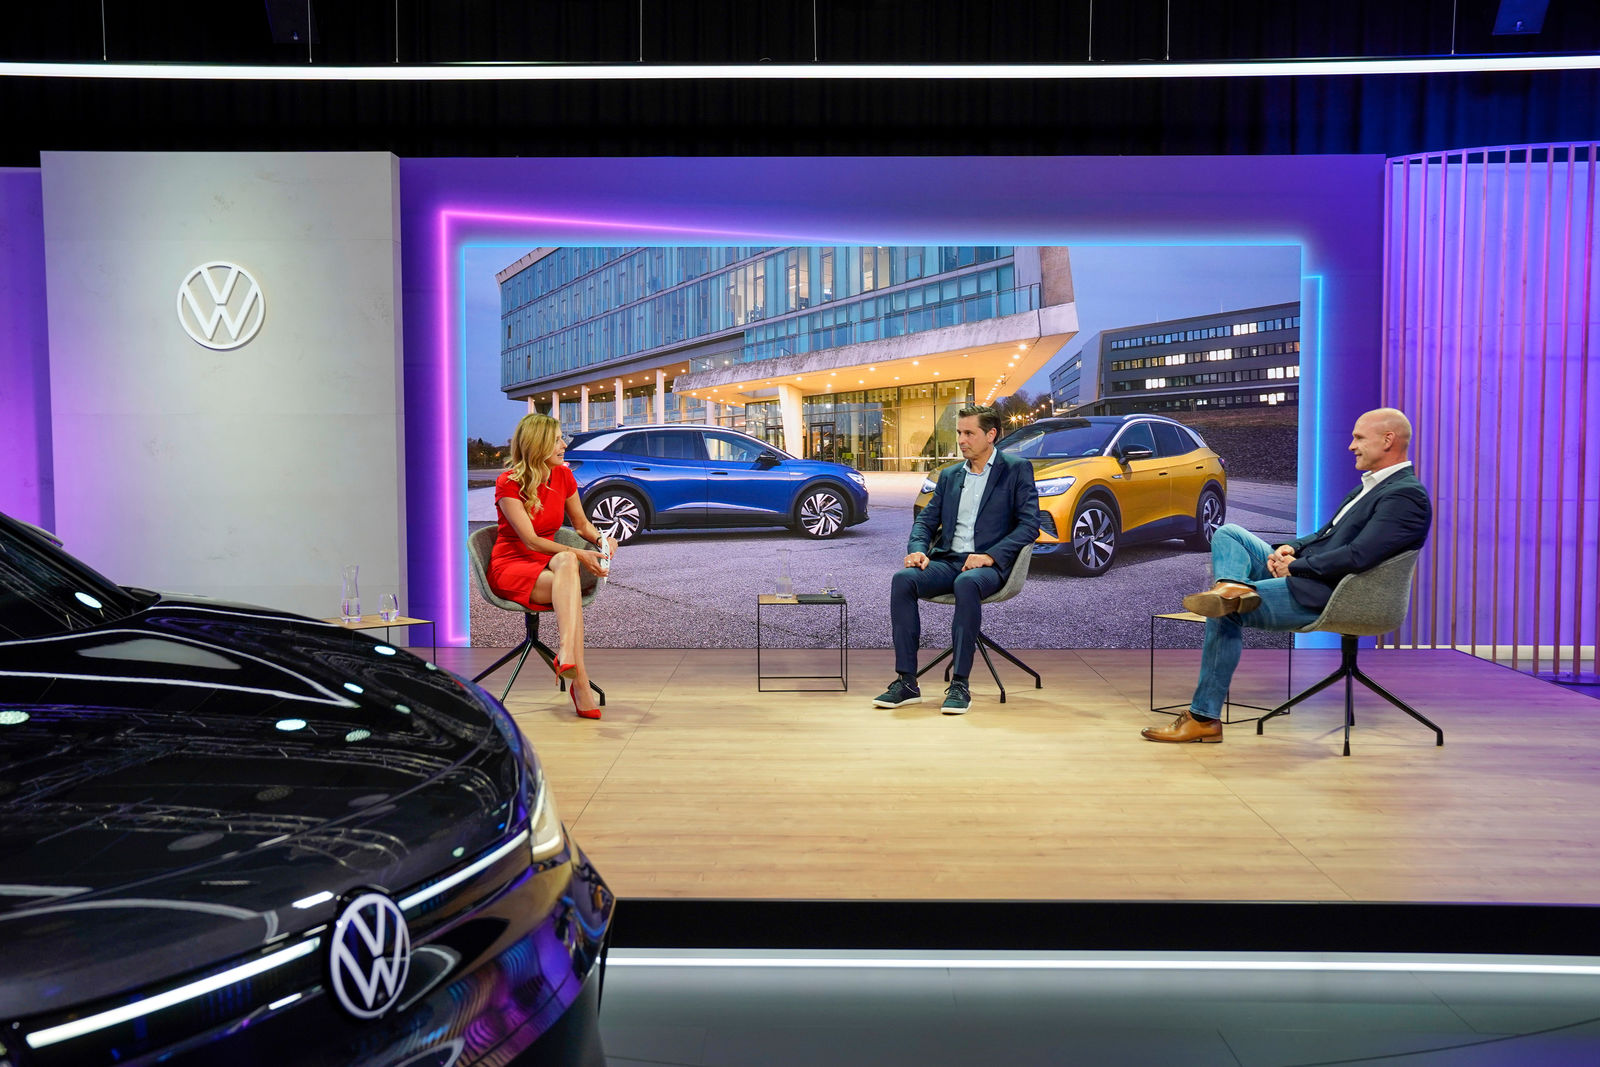 Innovation Talk - The Volkswagen Software Offensive